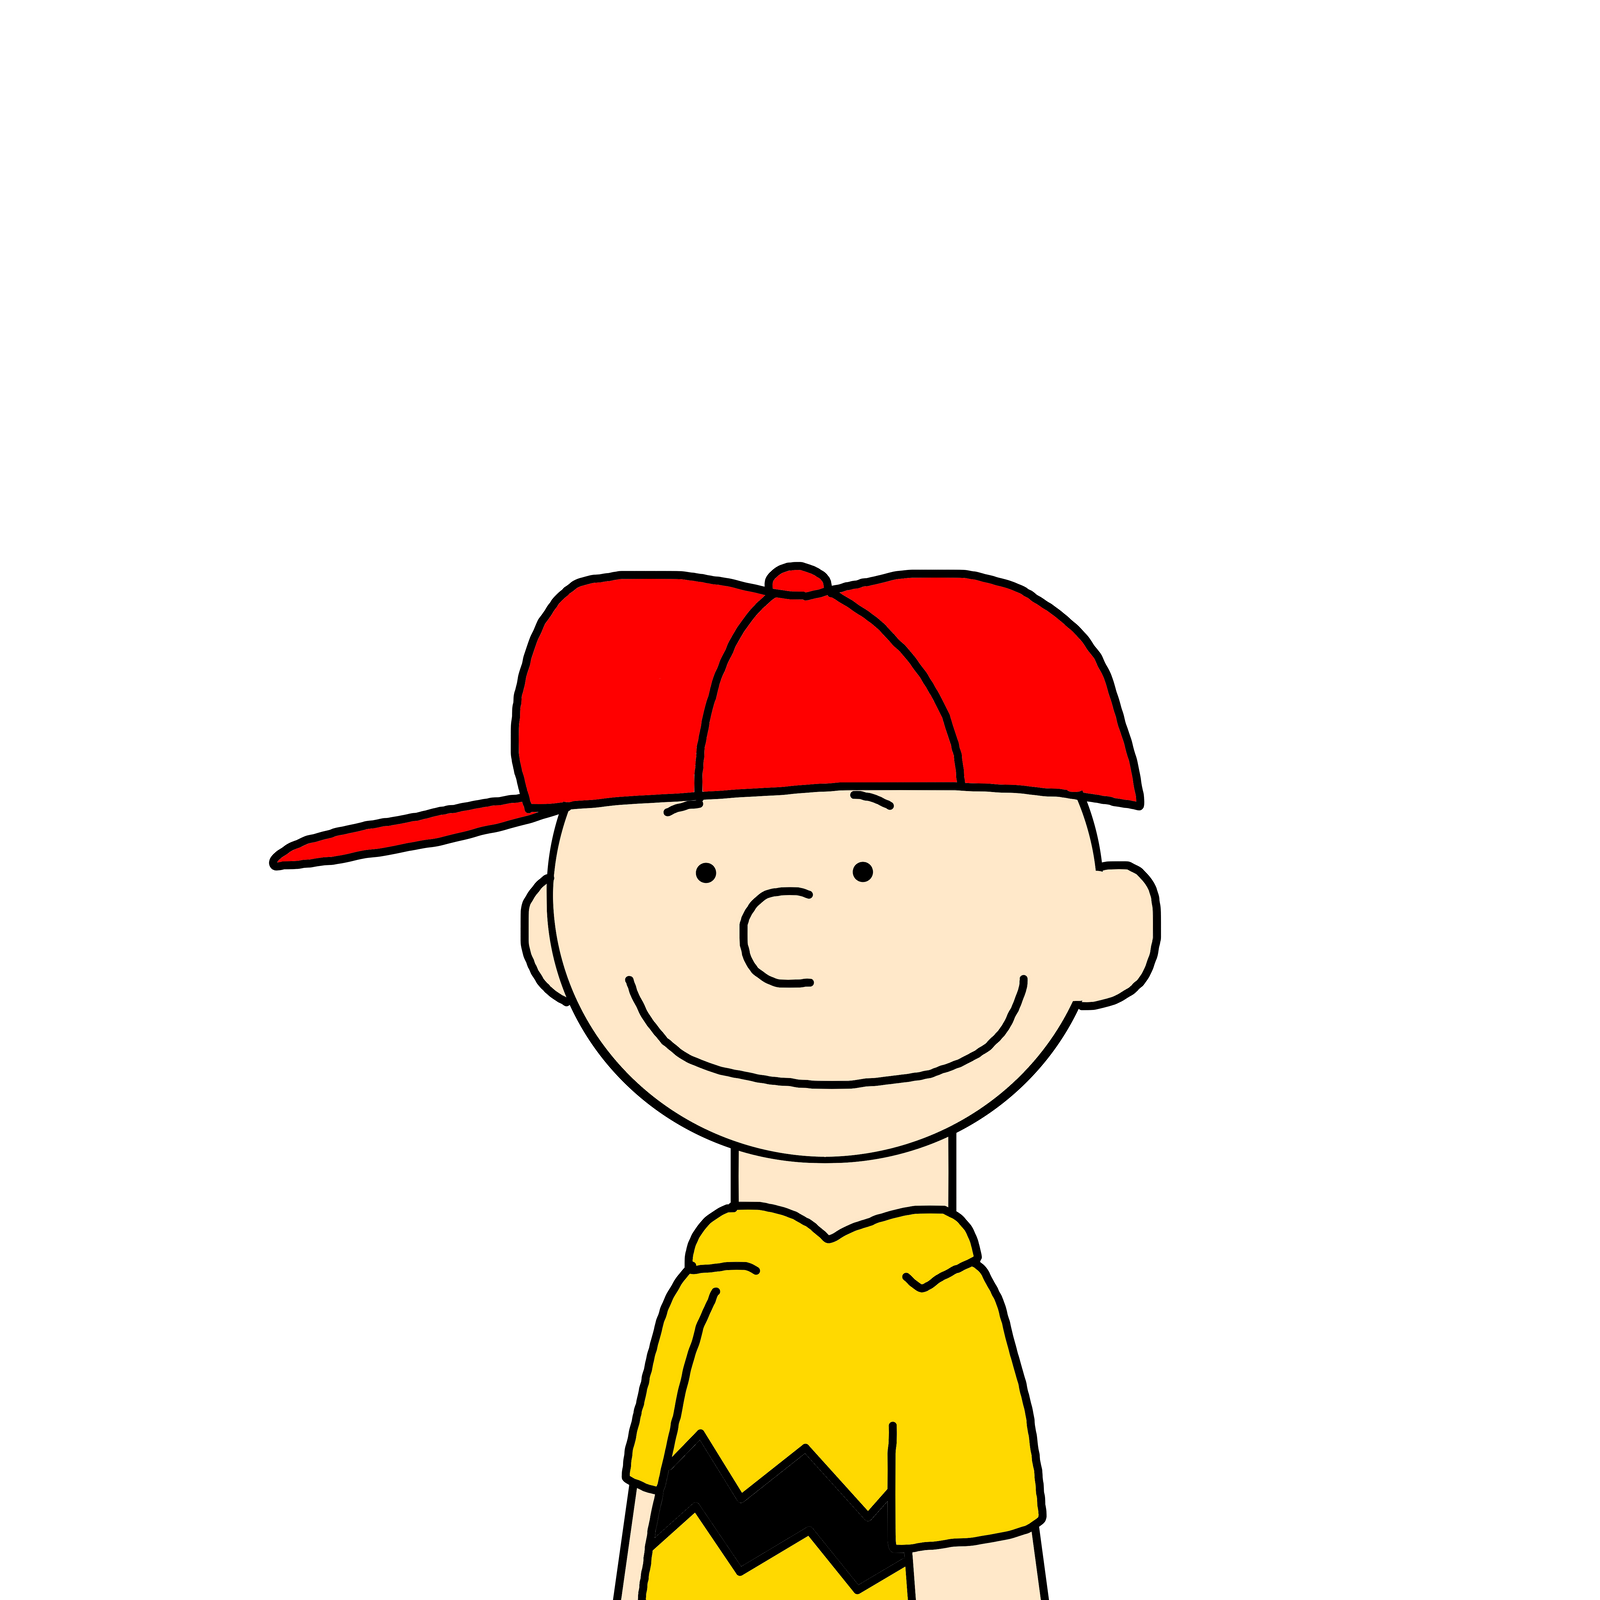 Charlie Brown with red cap by Ultra-Shounen-Kai-Z on DeviantArt